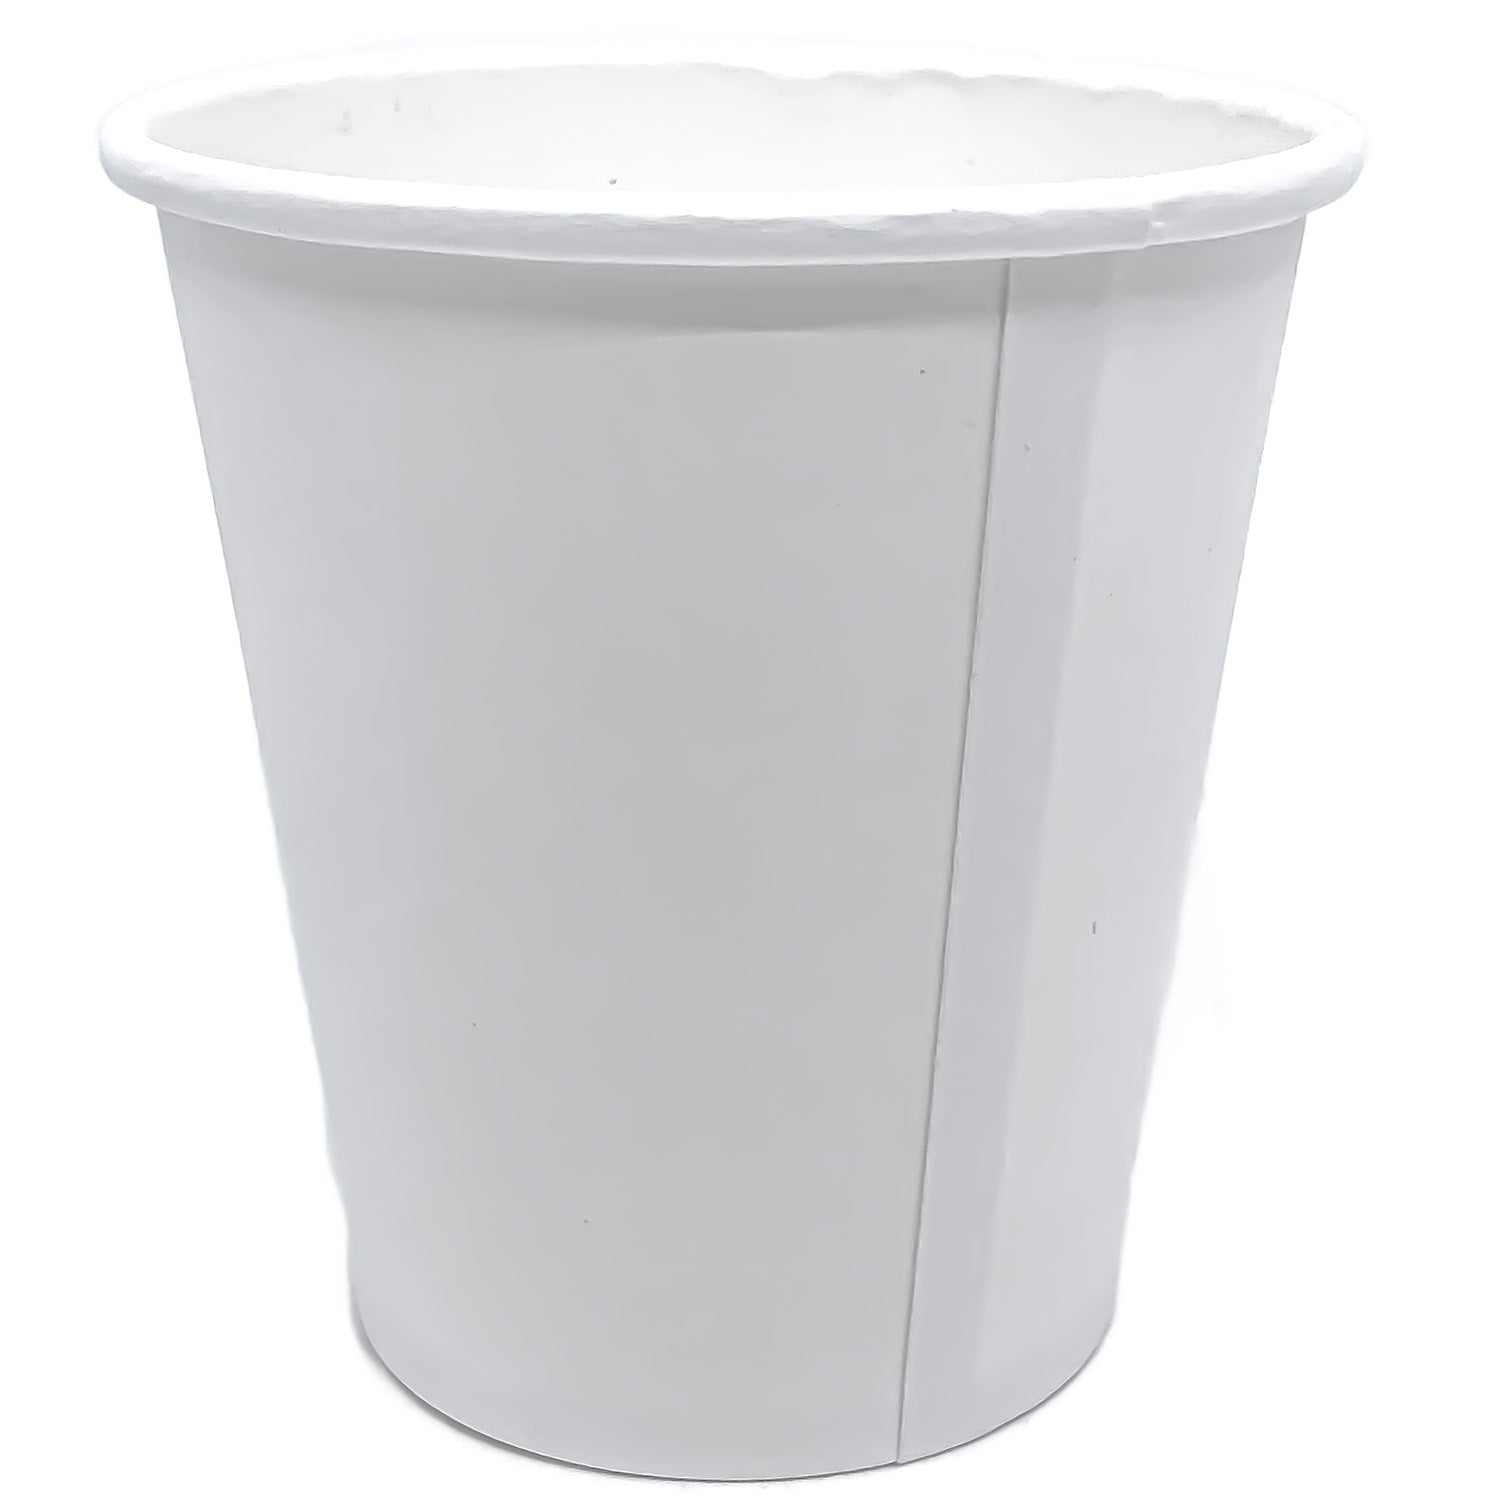 White Paper Coffee Cups, 12oz, 50ct